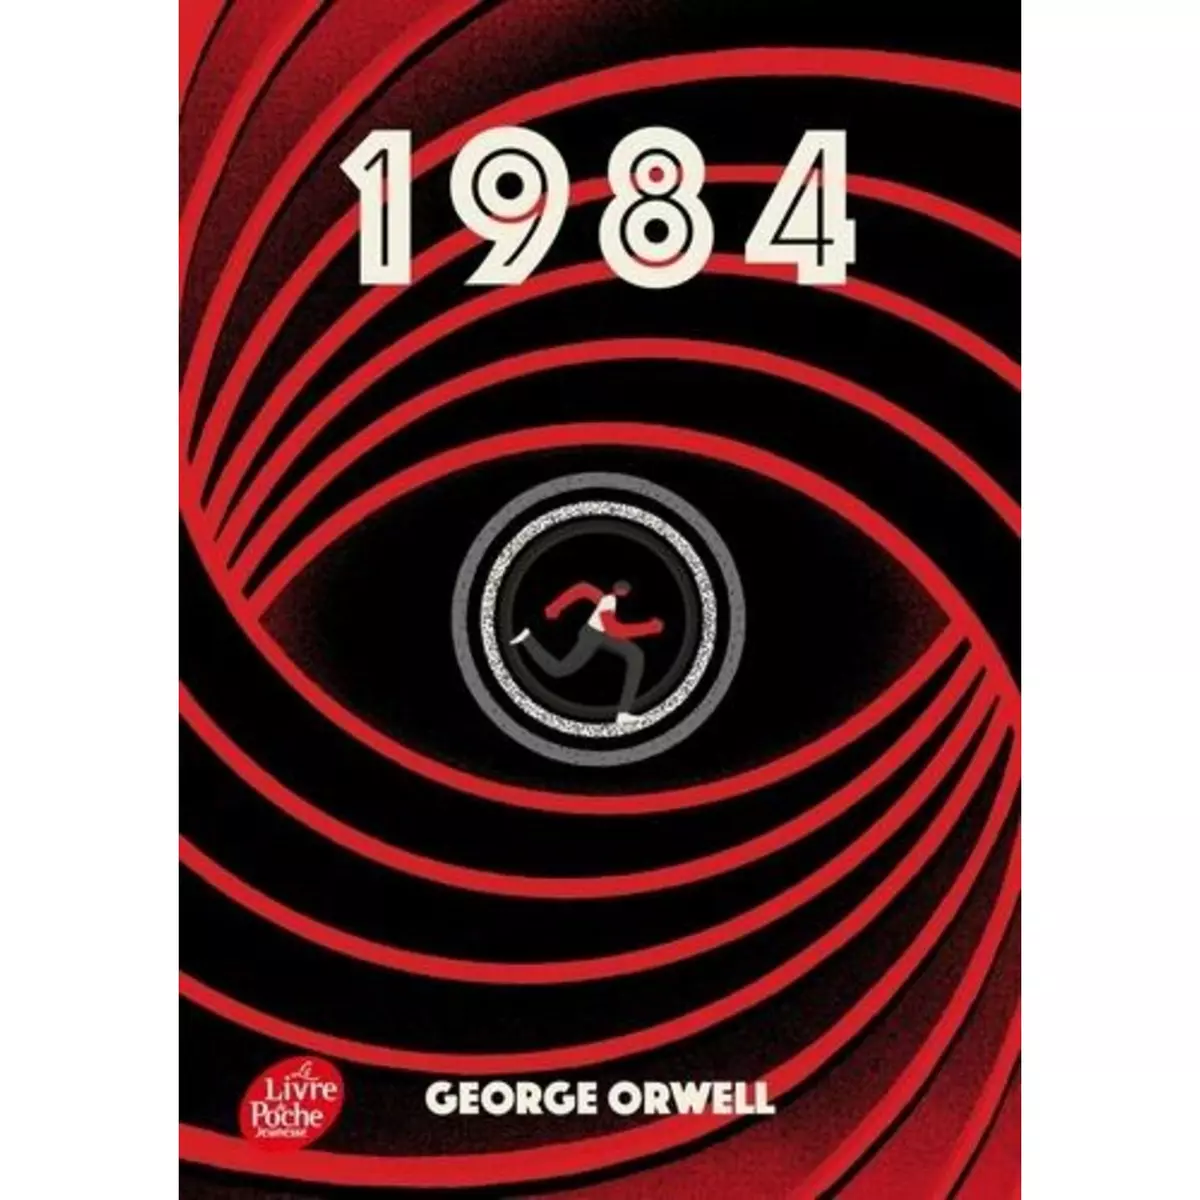  1984. TEXTE ABREGE, Orwell George